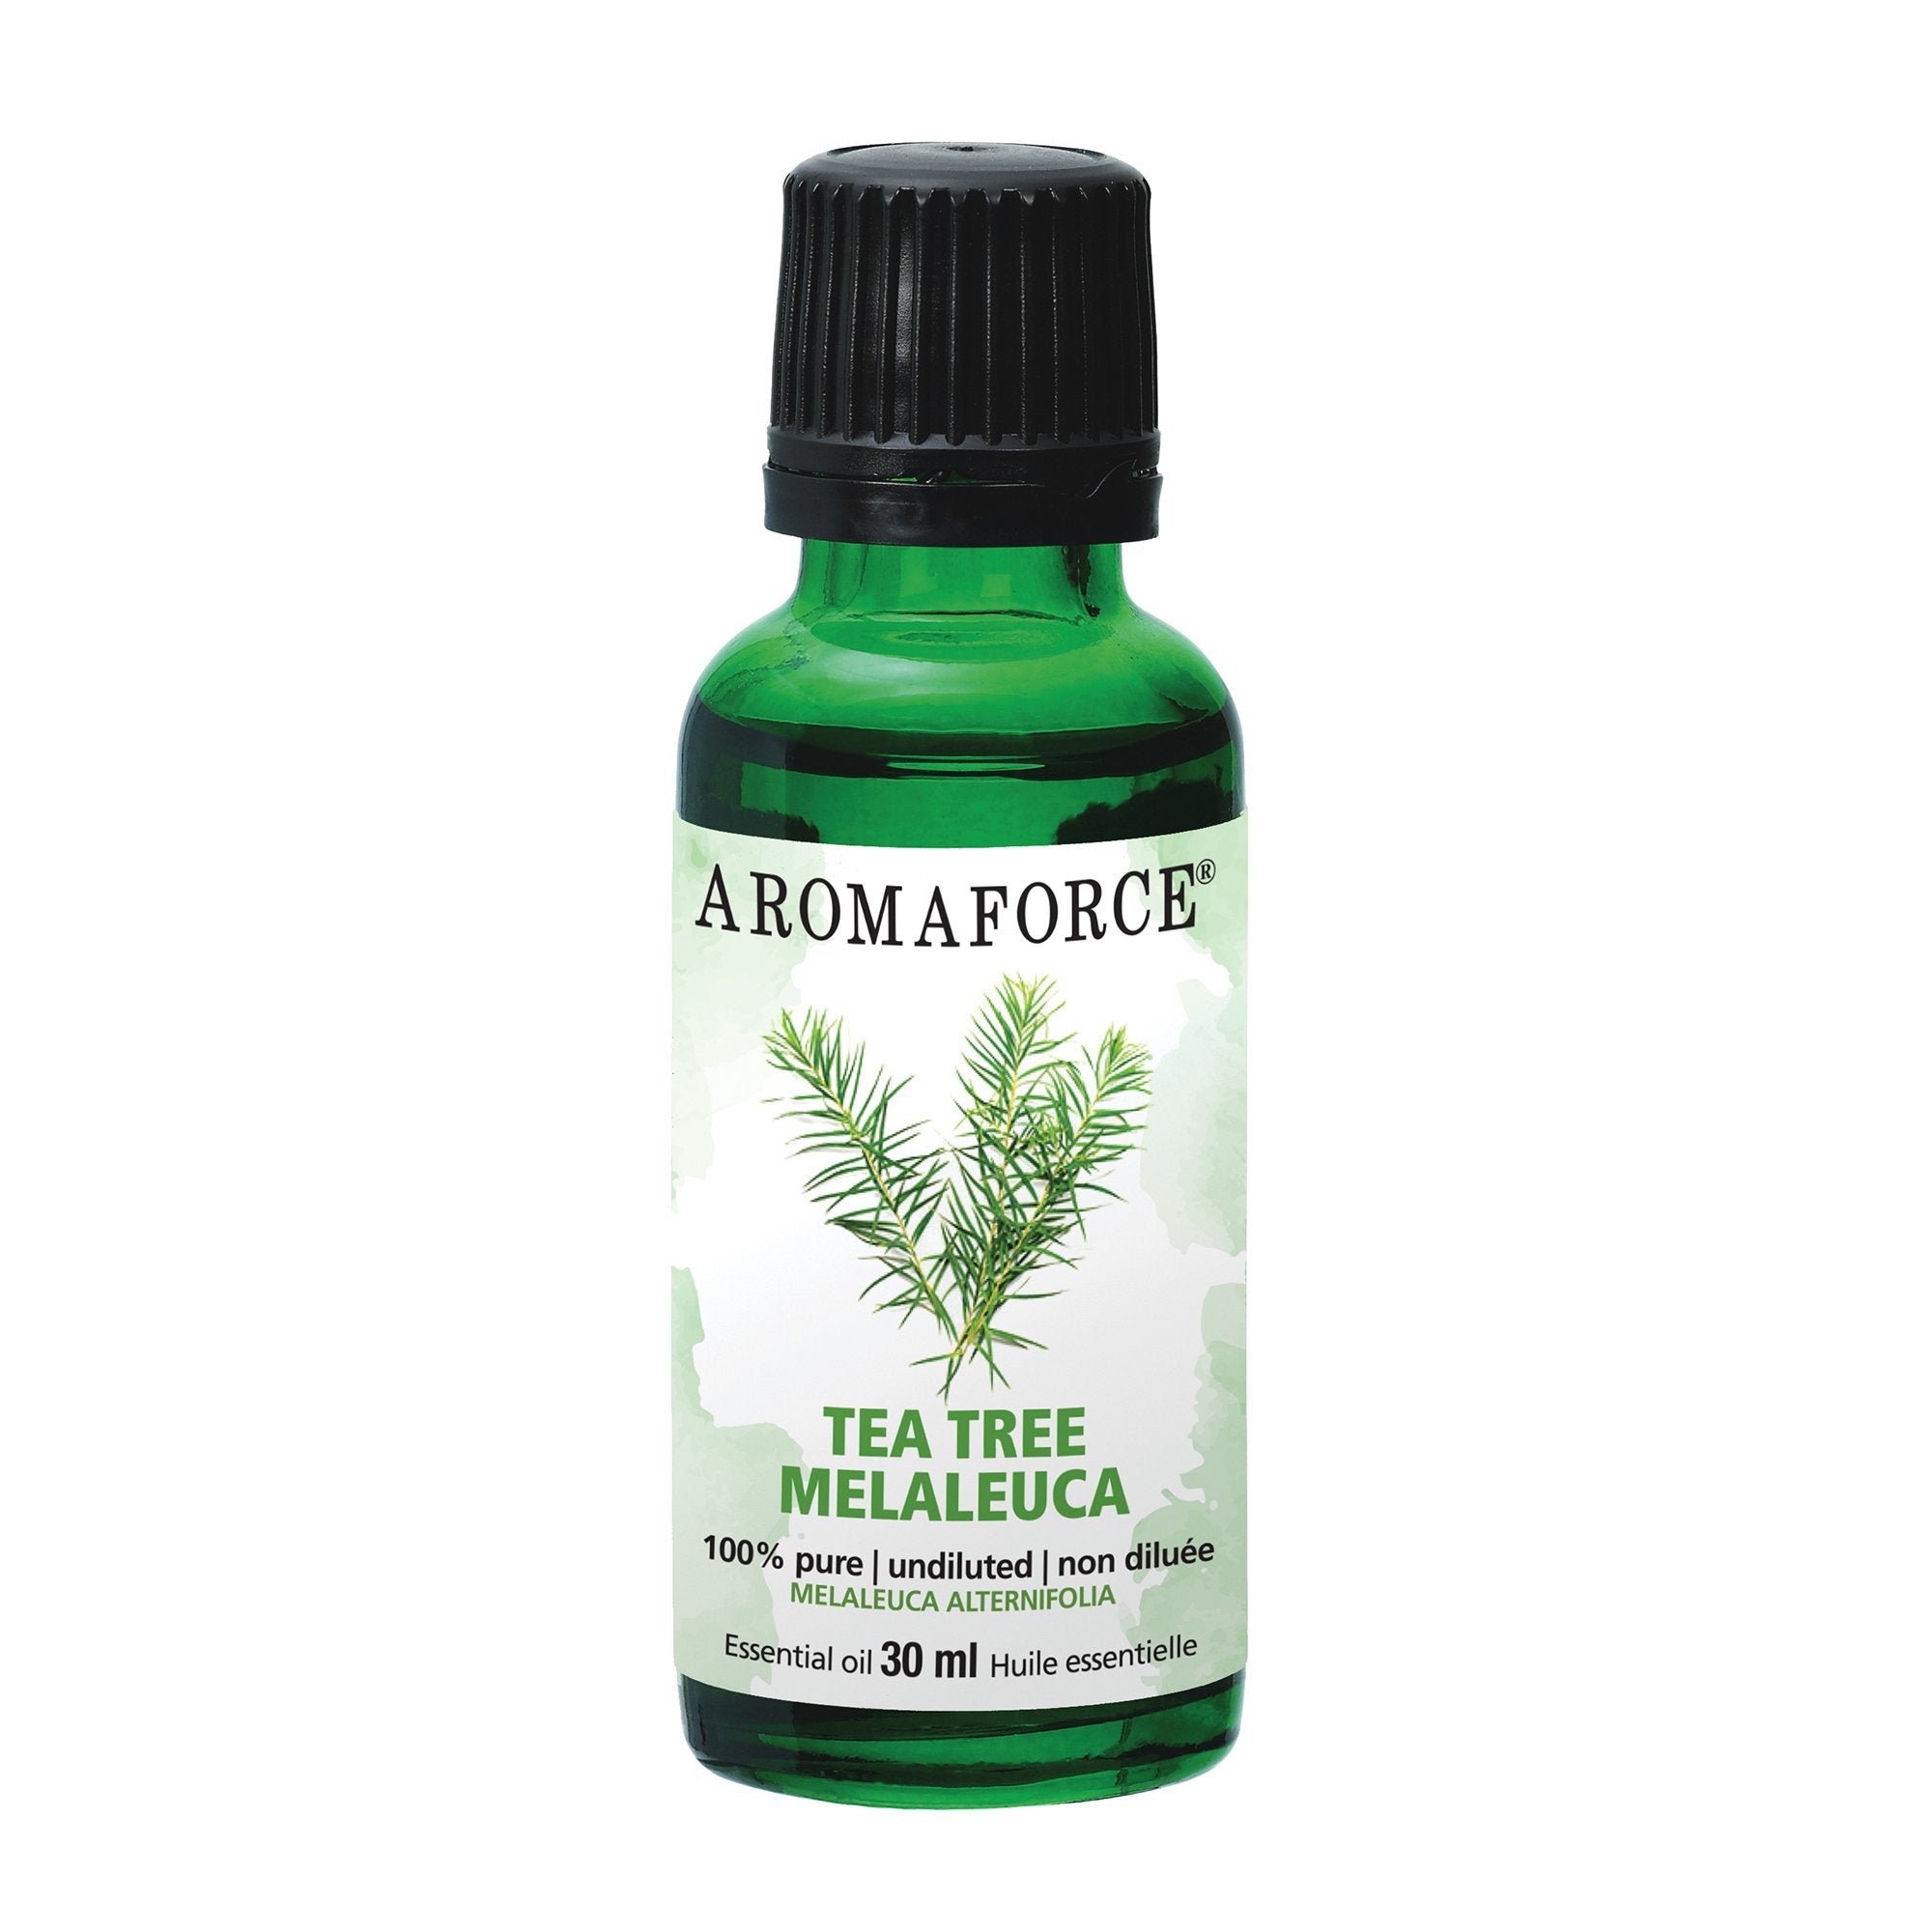 Aromaforce Tea Tree Essential Oil 30mL - A.Vogel Canada